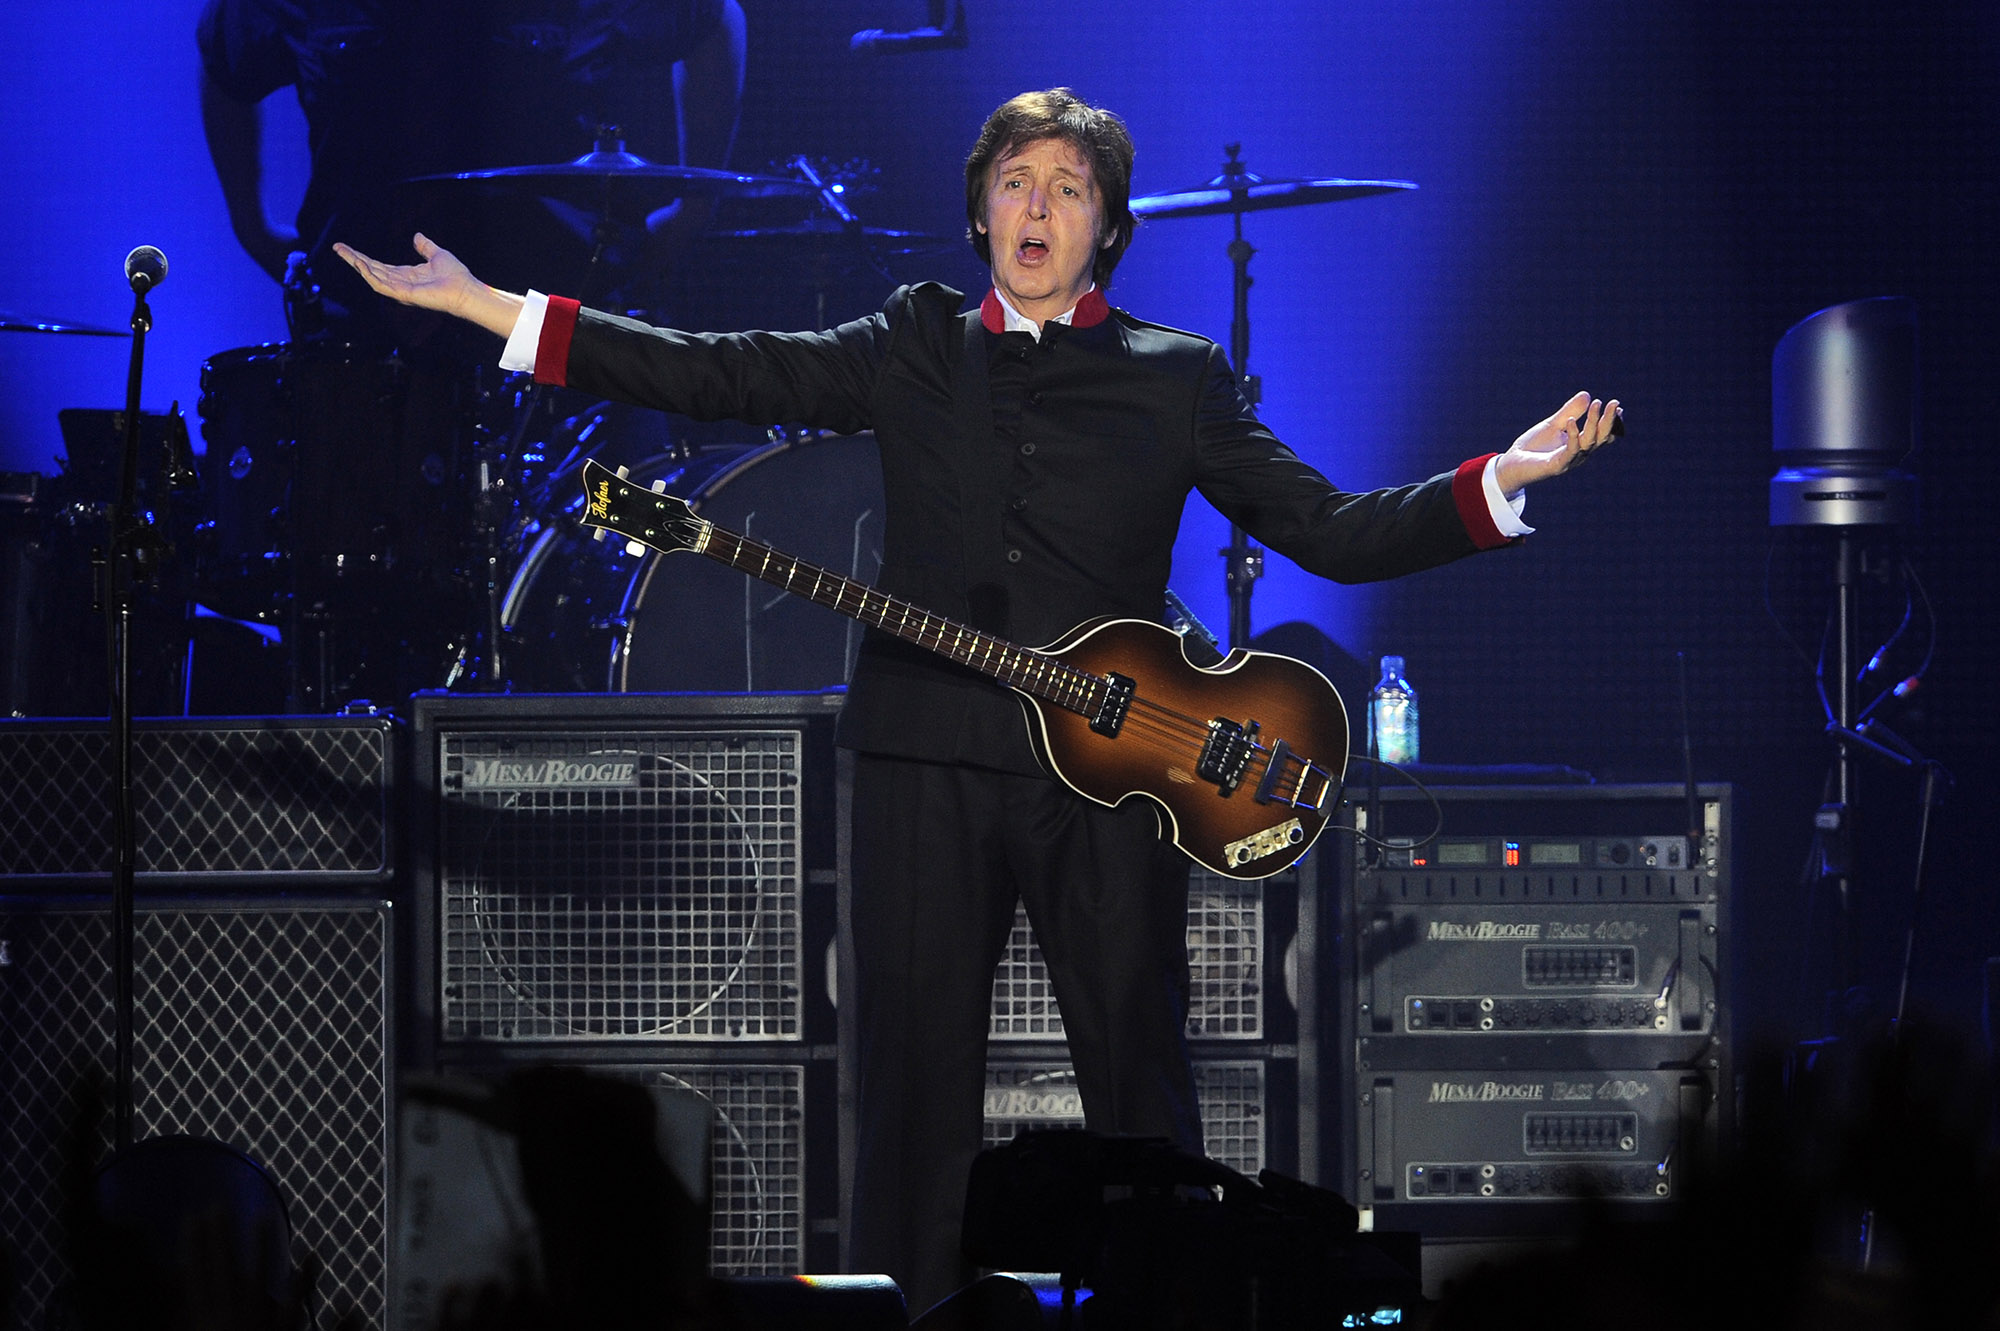 Milan Italy, 27 November 2011,Live concert of Paul McCartney at the  Forum Assago : Paul McCartney during the concert